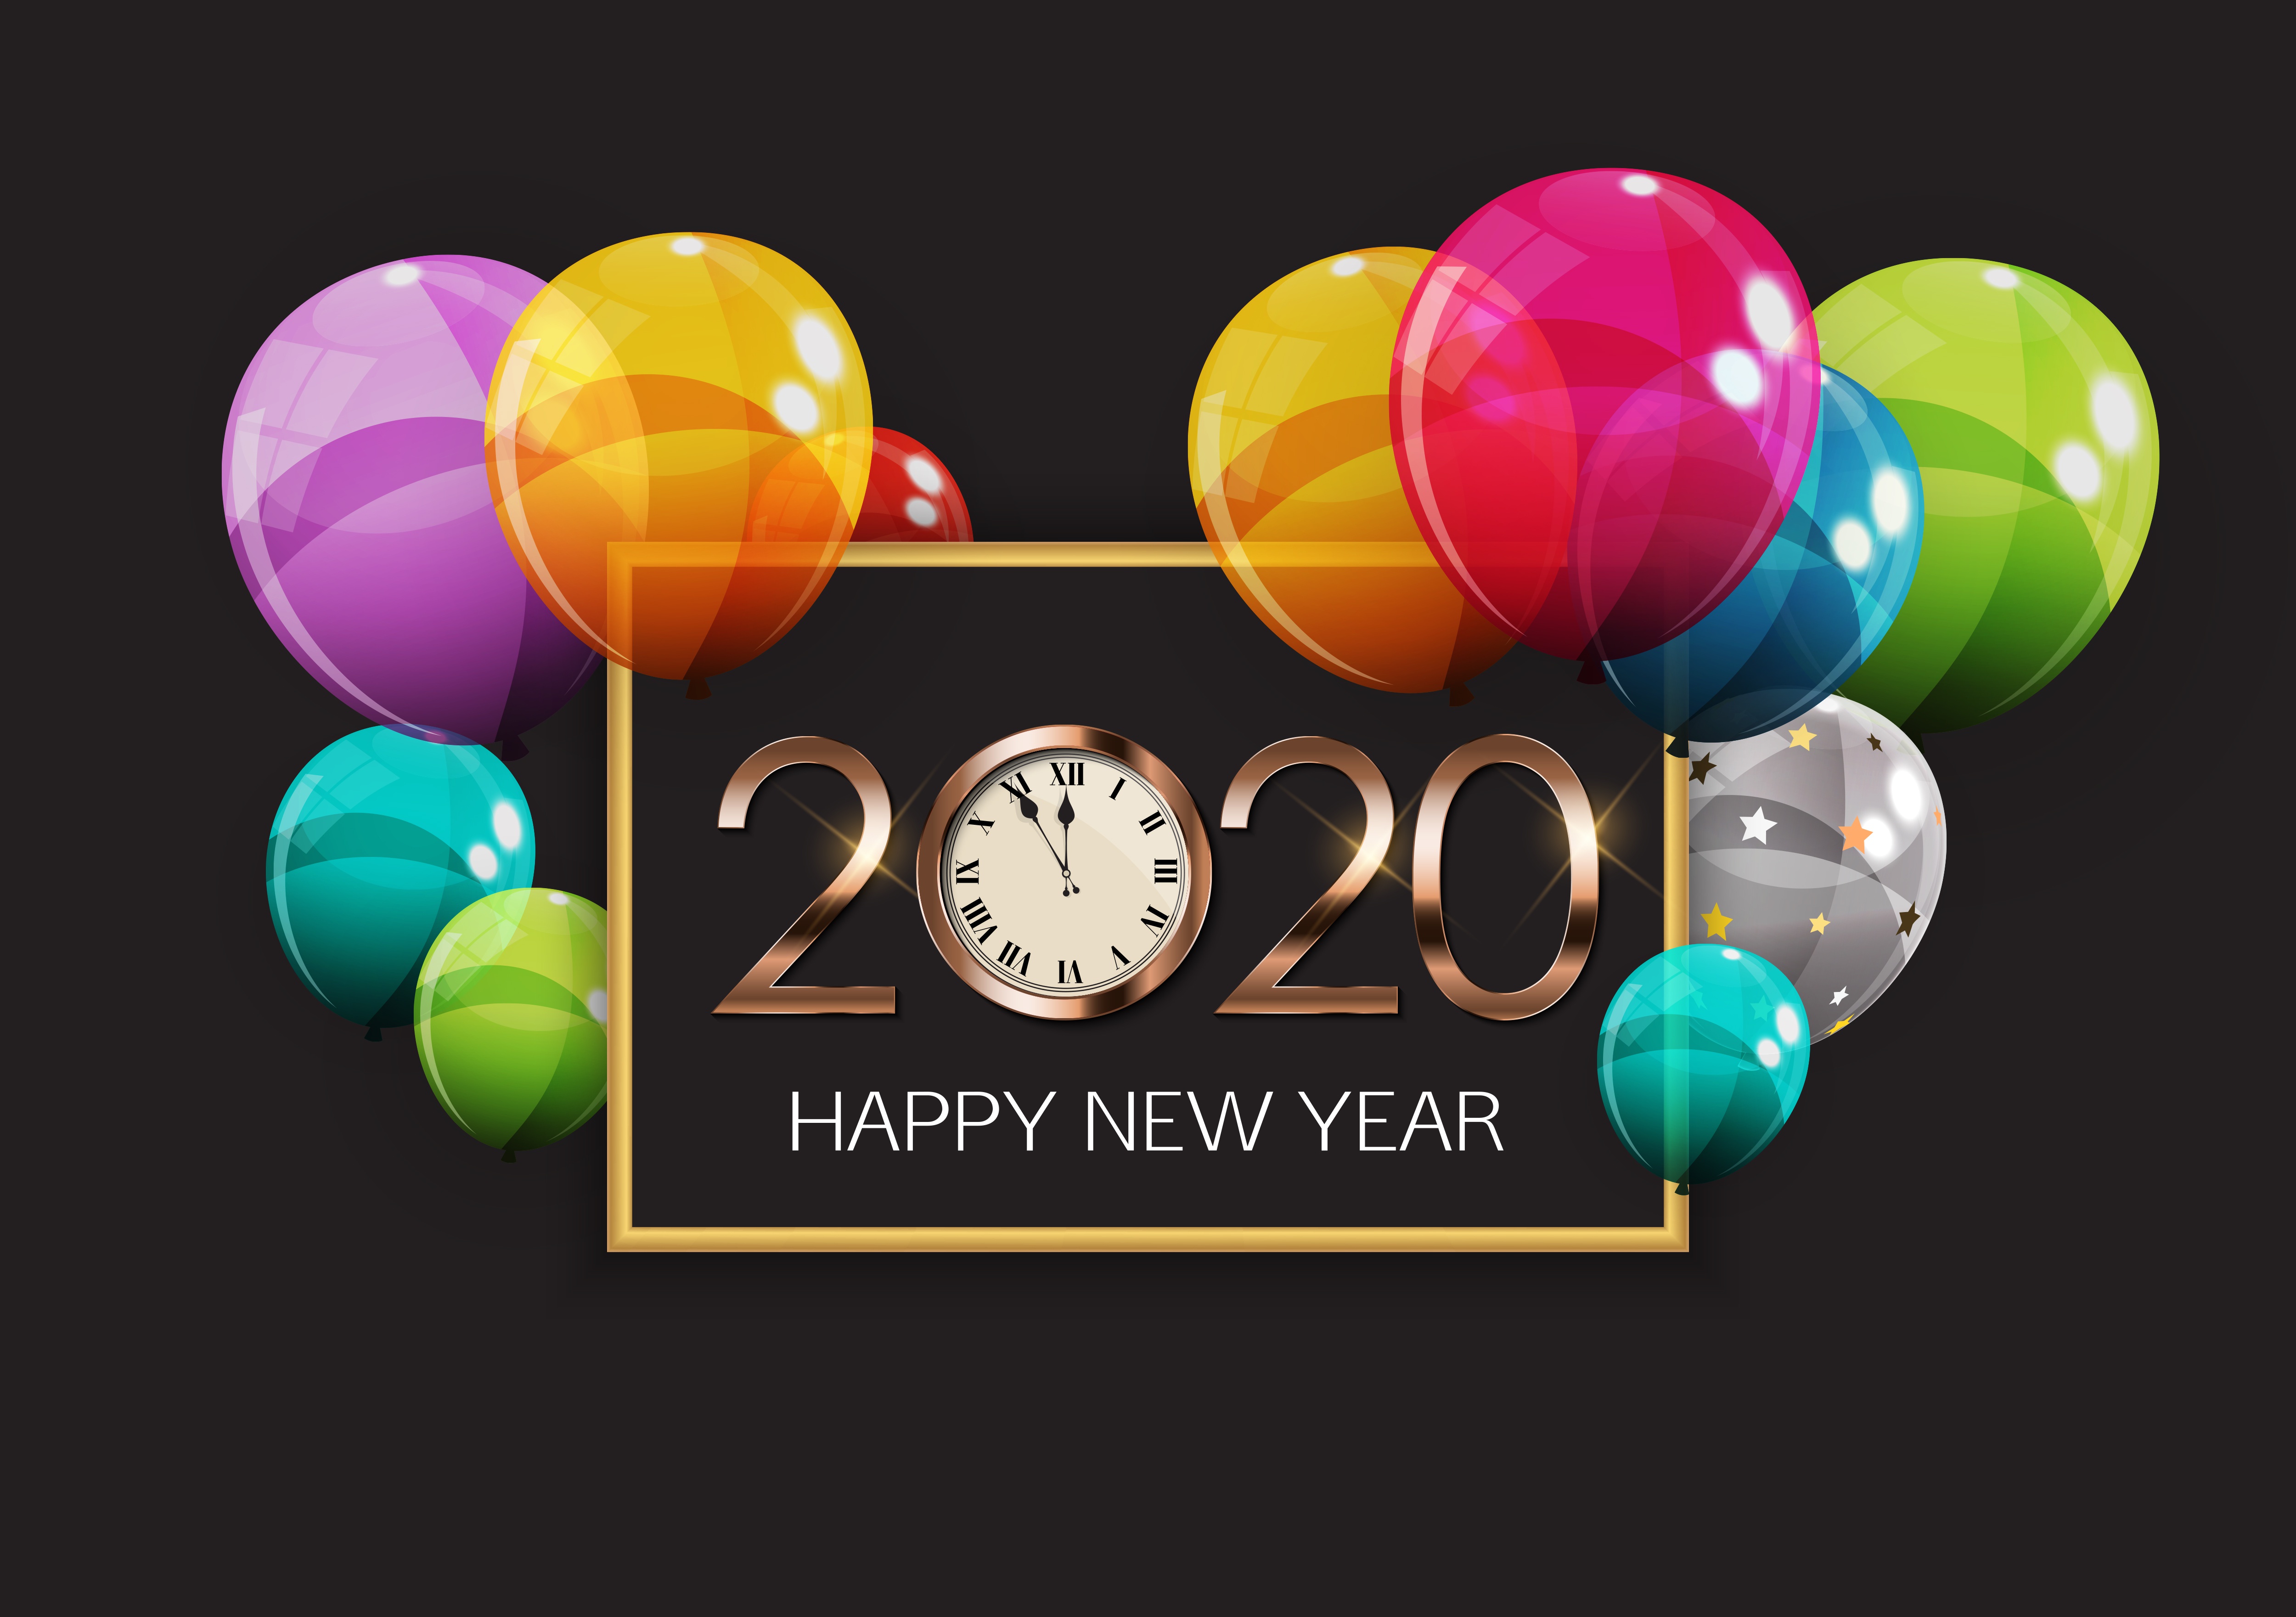 New Year 2020 4k Ultra HD Wallpaper Background Image 5000x3521